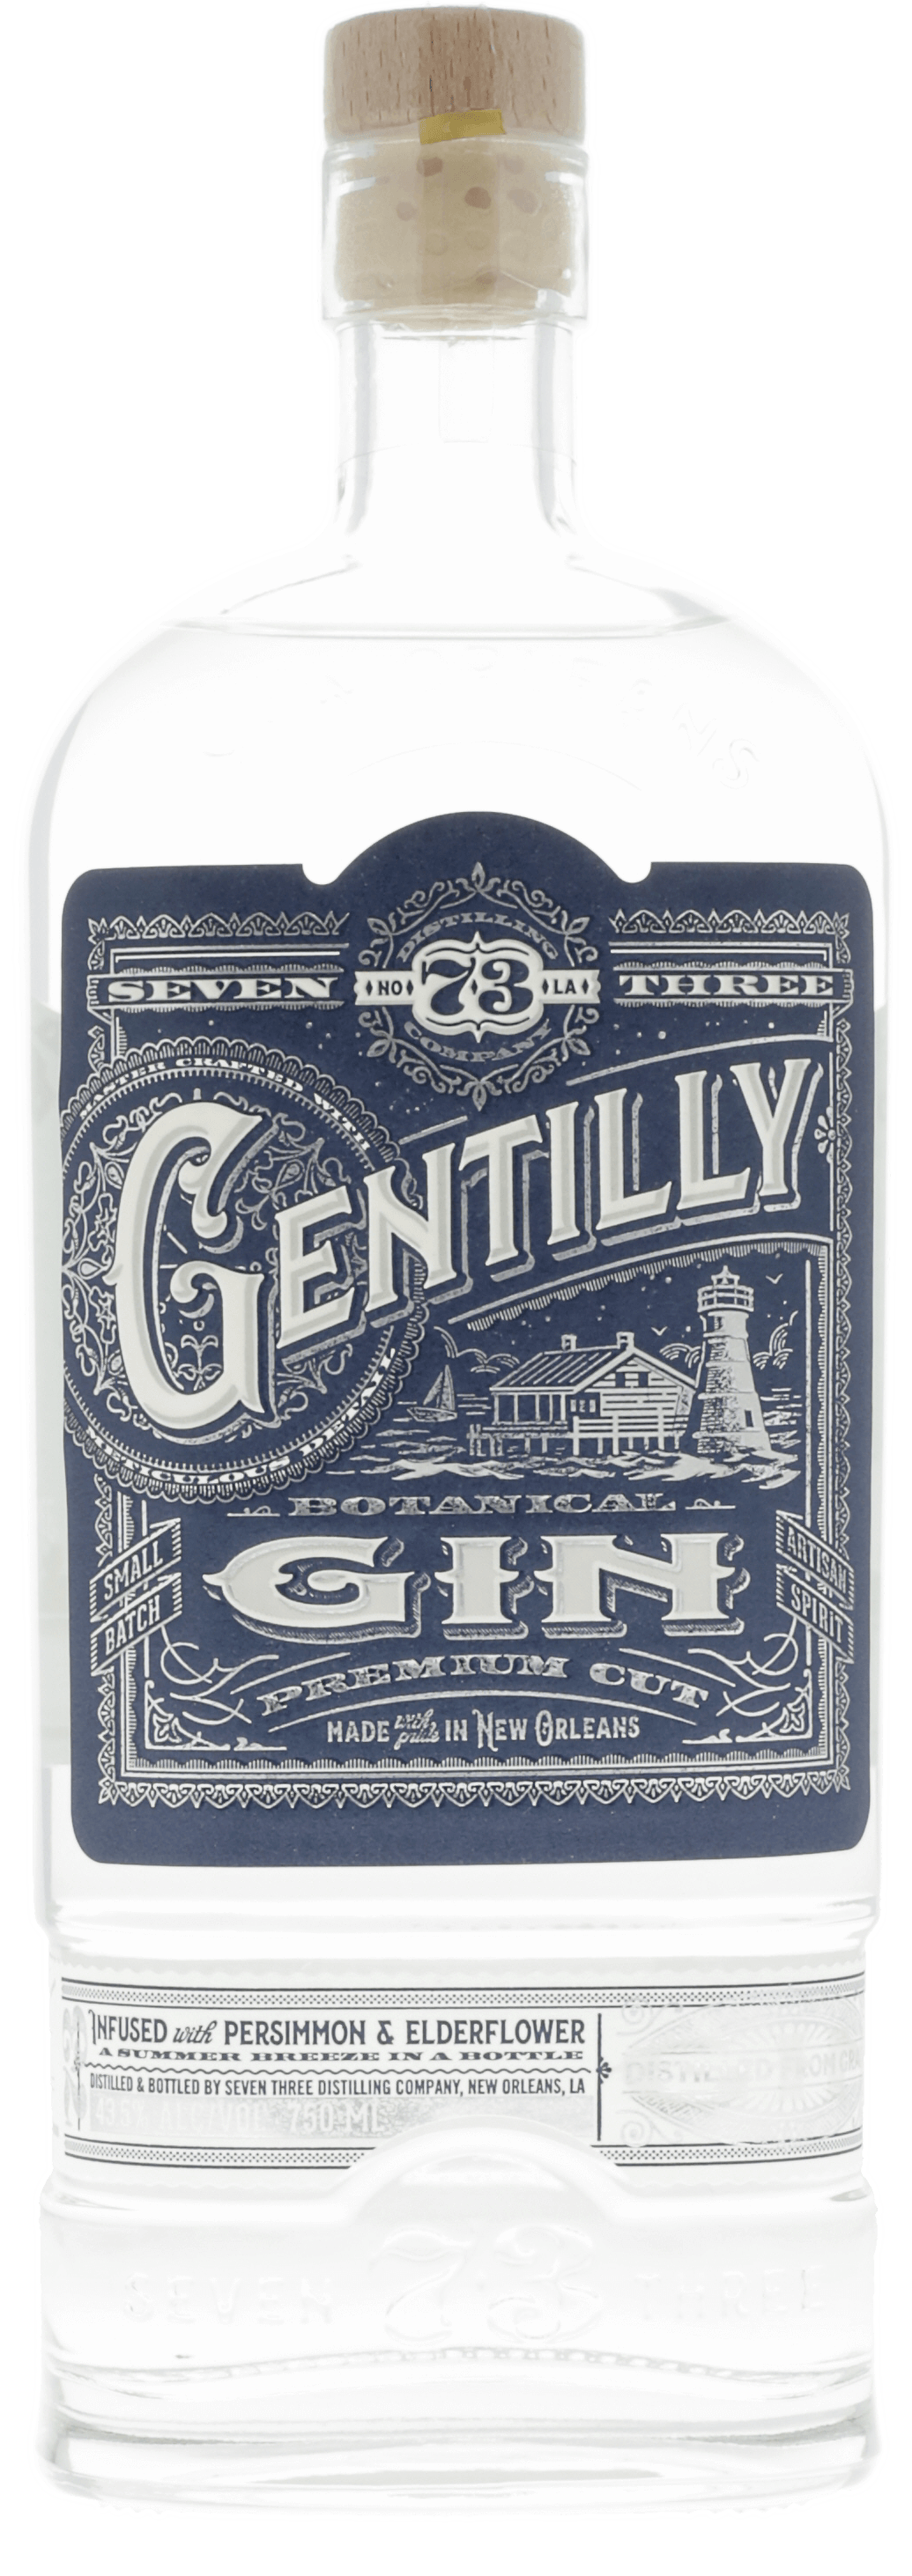 Gentilly Gin